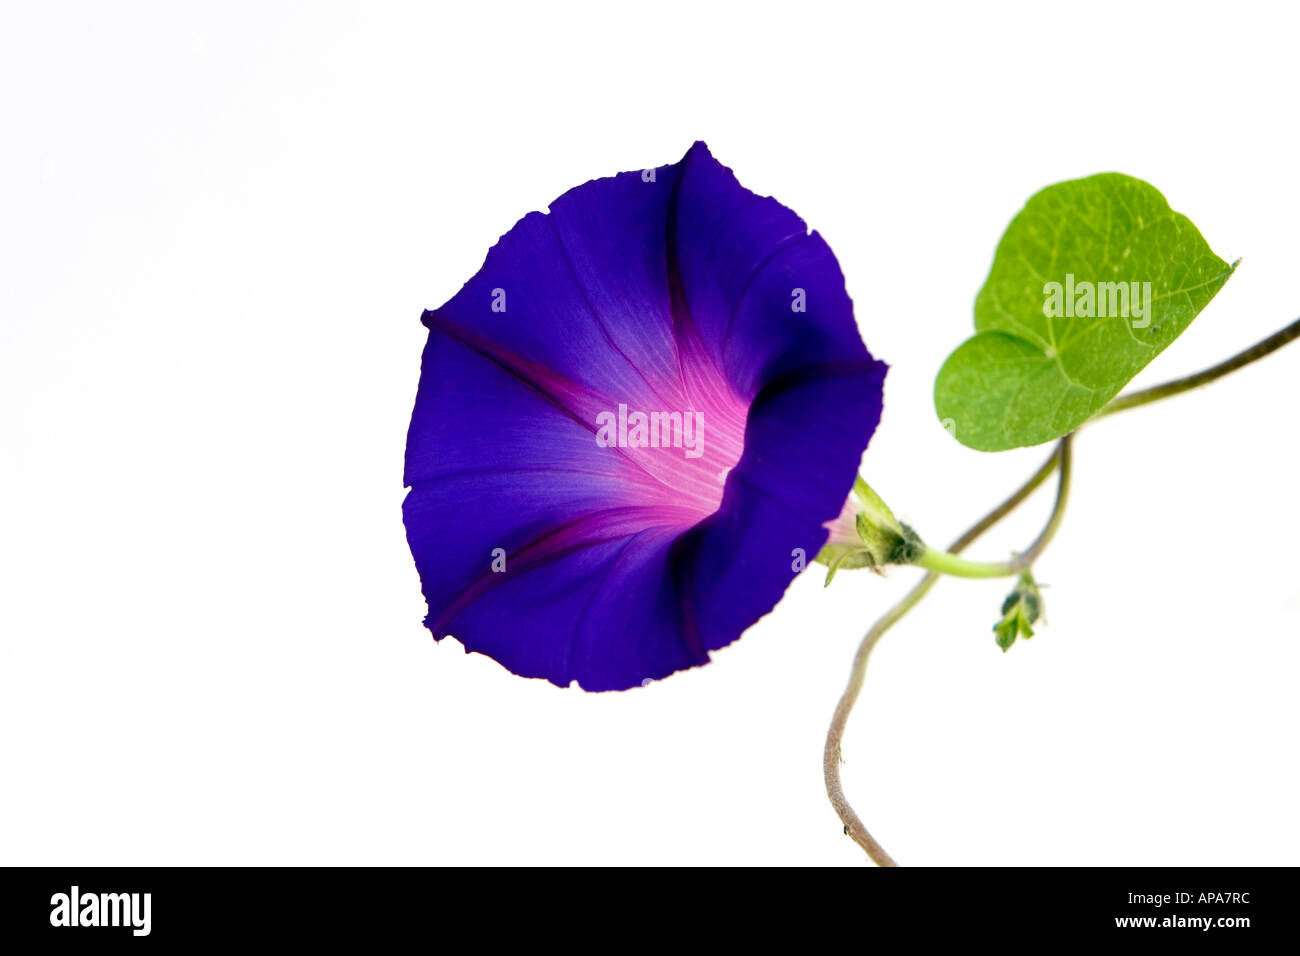 Ipomoea purpurea. Morning Glory flower against white background Stock Photo